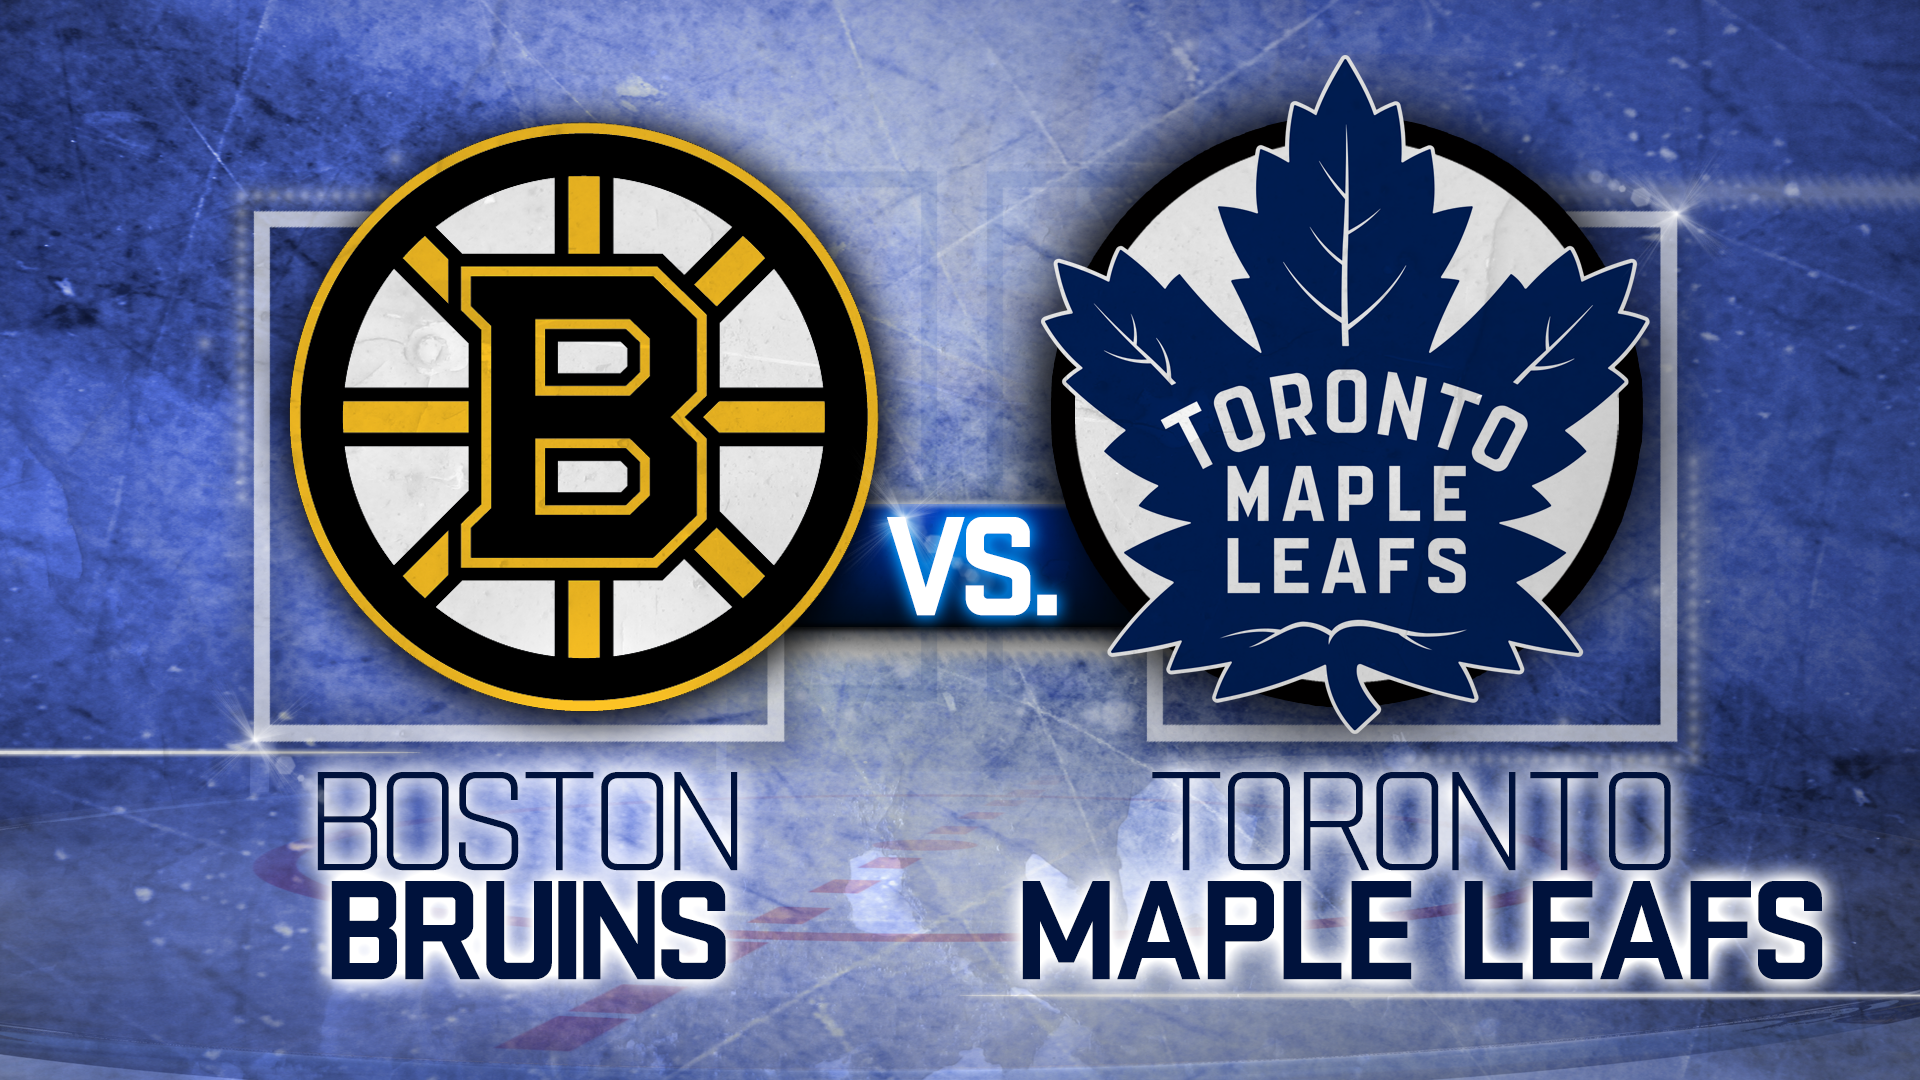 Pavel Zacha scores 2 goals as the Boston Bruins beat the Toronto Maple